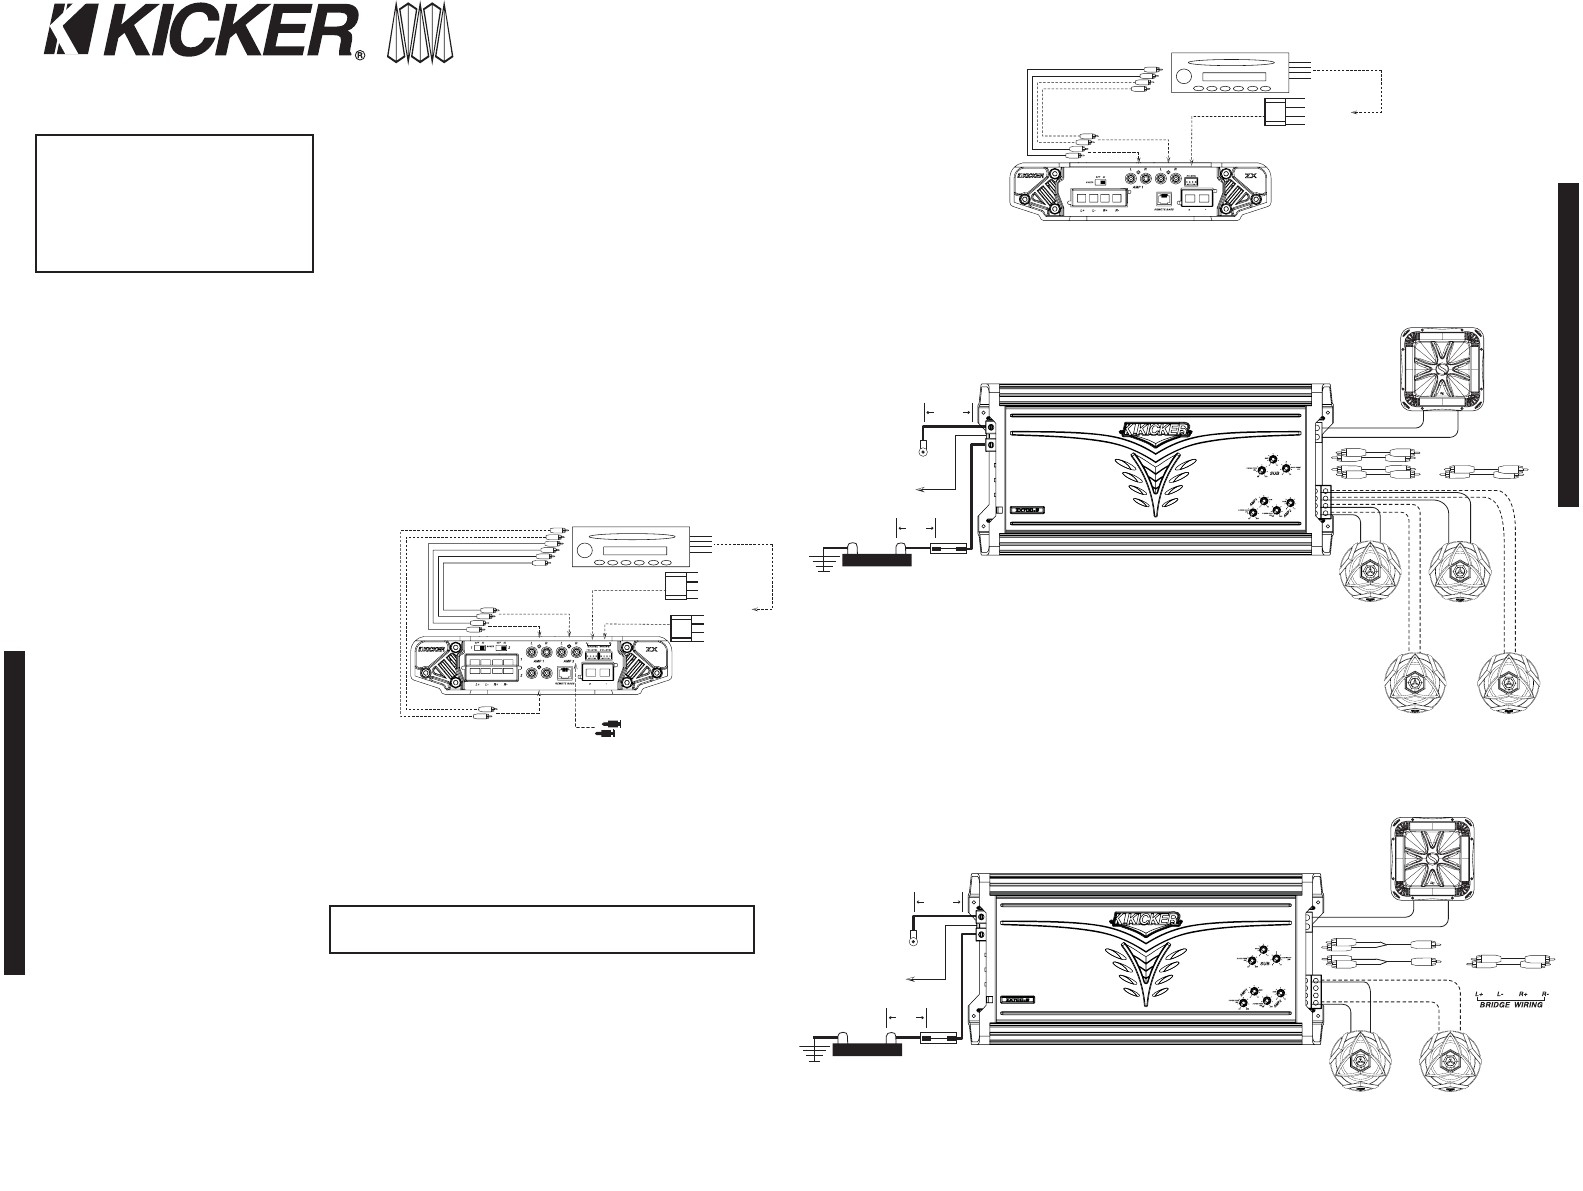 Kicker Kisl Wiring Diagram Collection | Wiring Diagram Sample - Kicker Wiring Diagram